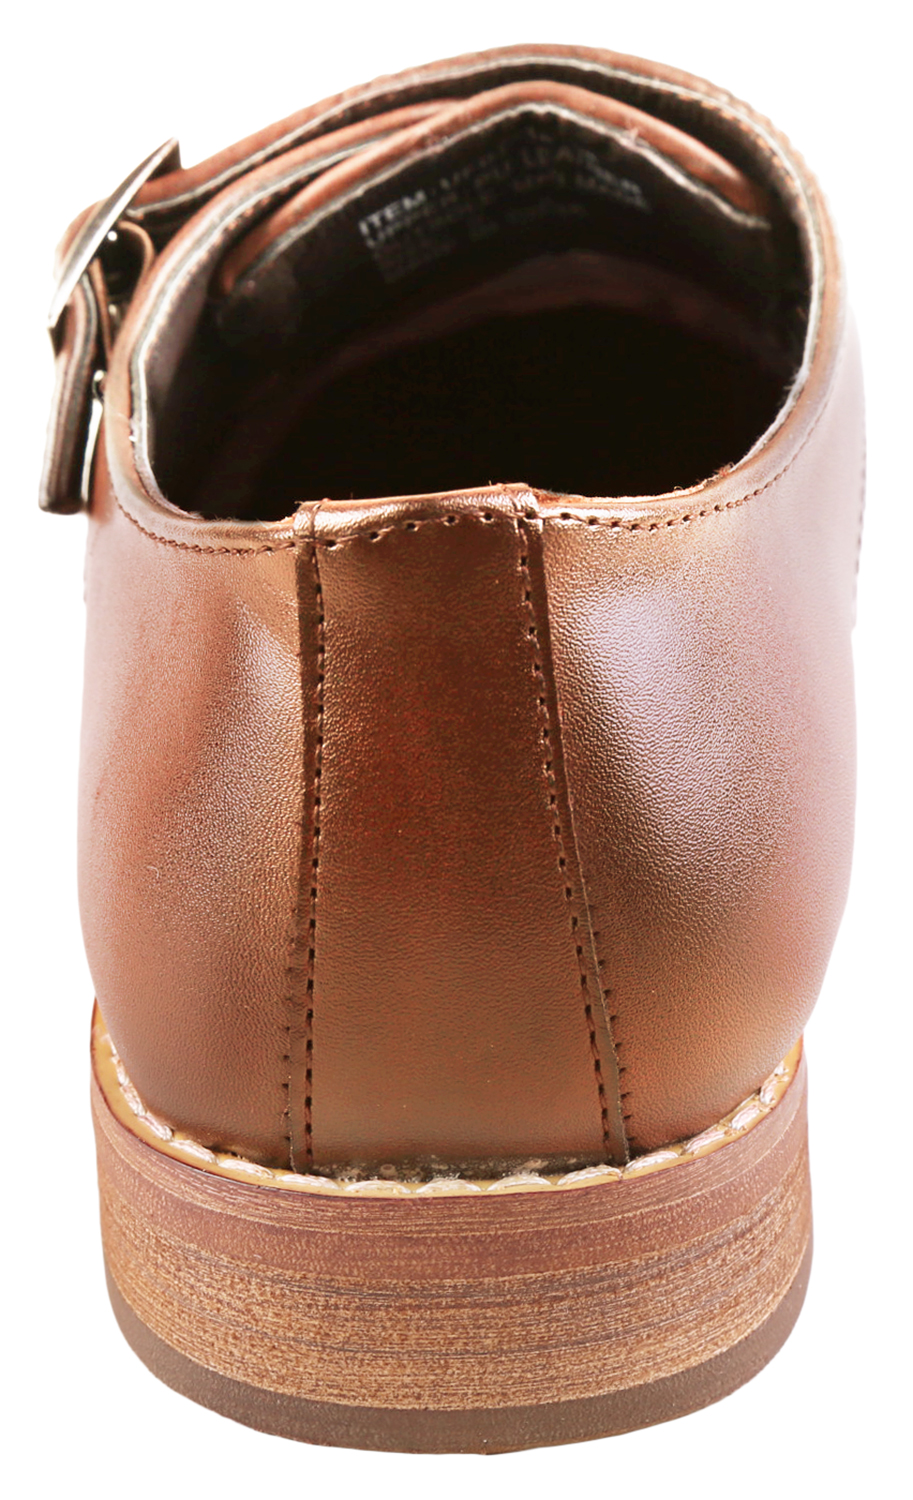 Urban Fox Allen Men's Dress Shoe | Double Monk Strap | Brogue | Wingtip Shoes for Men | Light Brown 13 M US - image 4 of 7